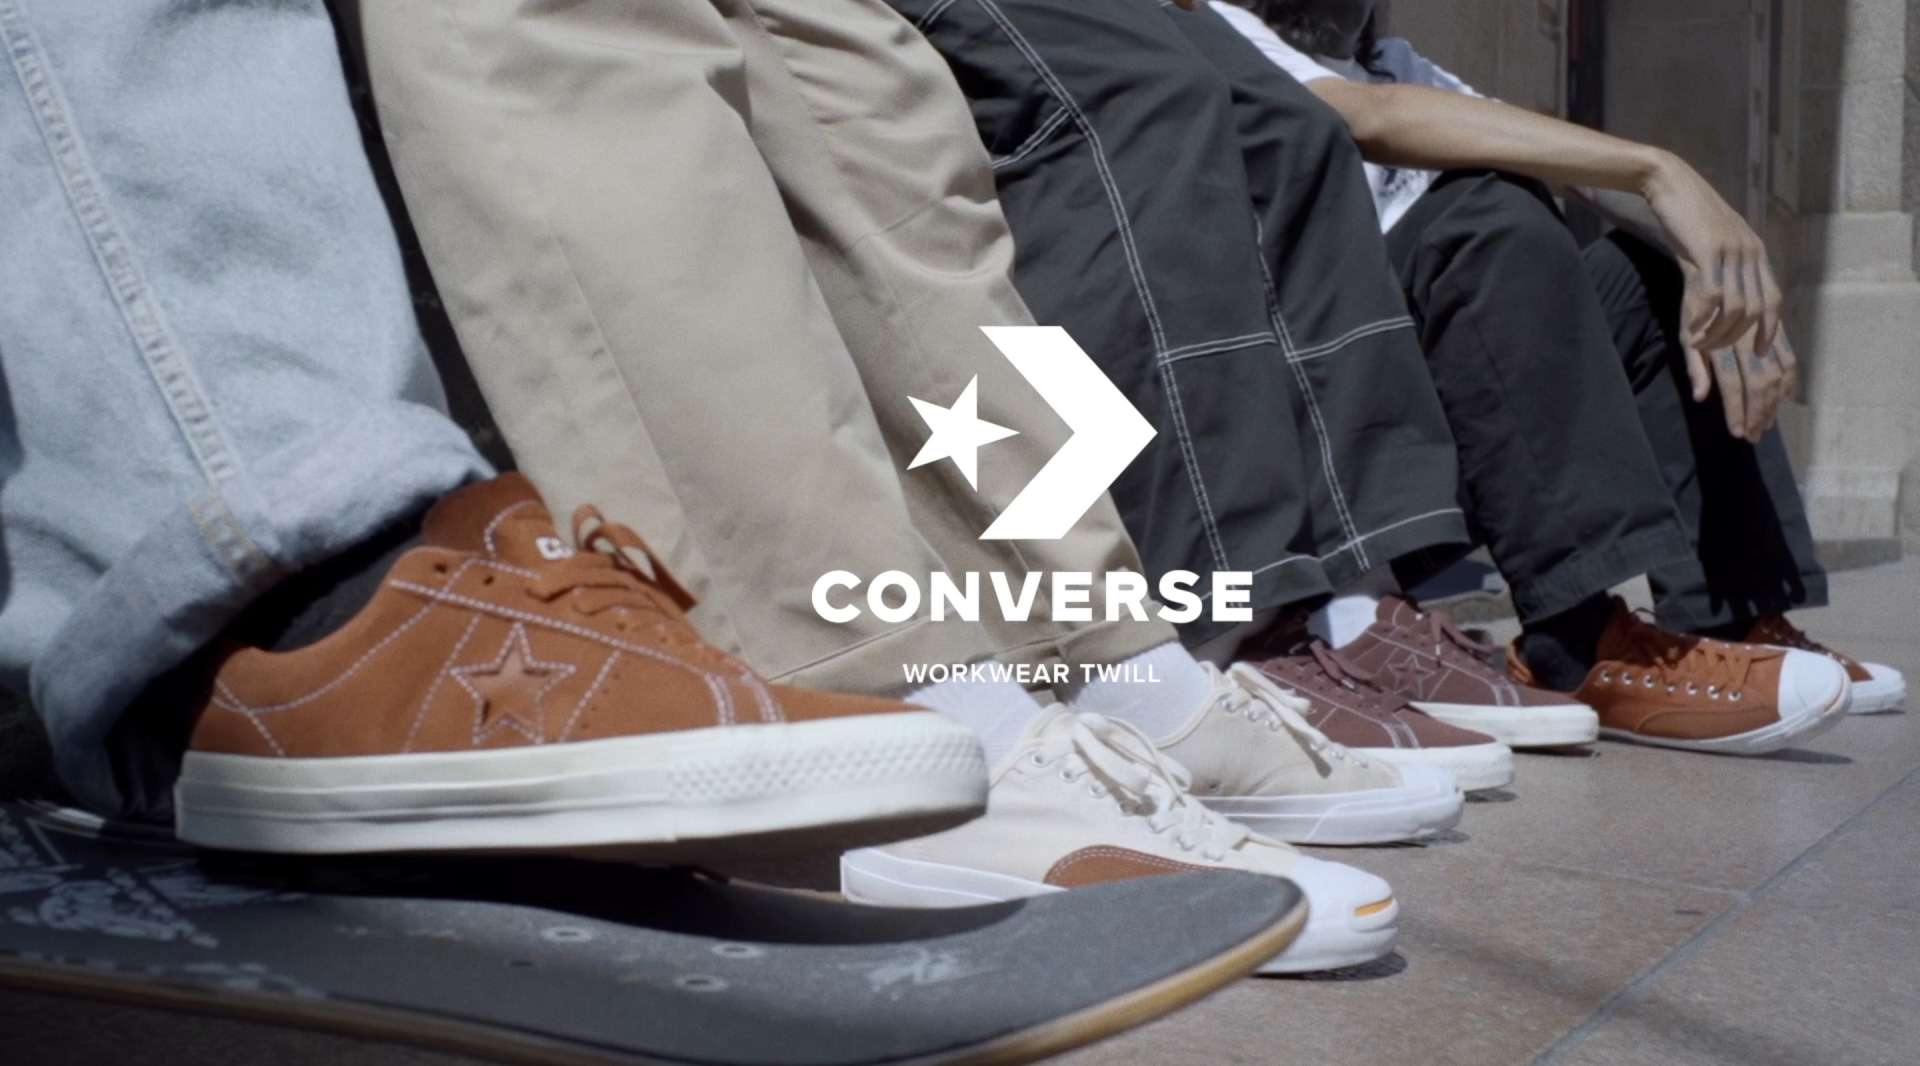 Converse work wear